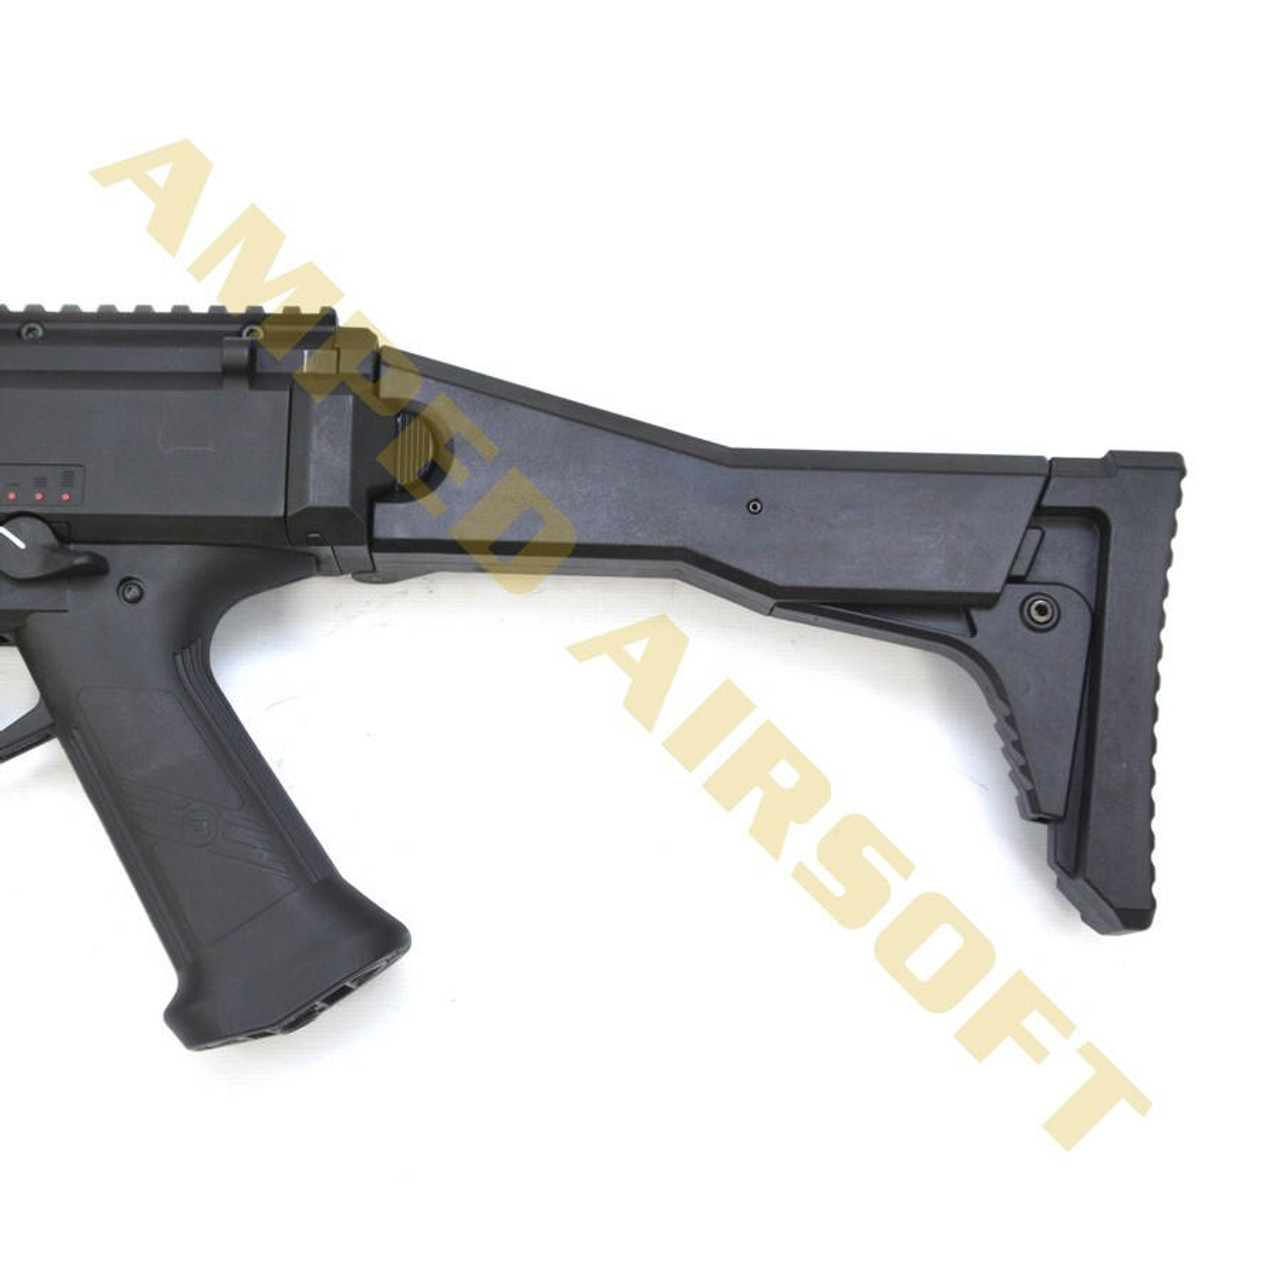 Action Sport Games (ASG) ASG Scorpion EVO | CZ Scorpion EVO 3 A1 Proline AEG Rifle 